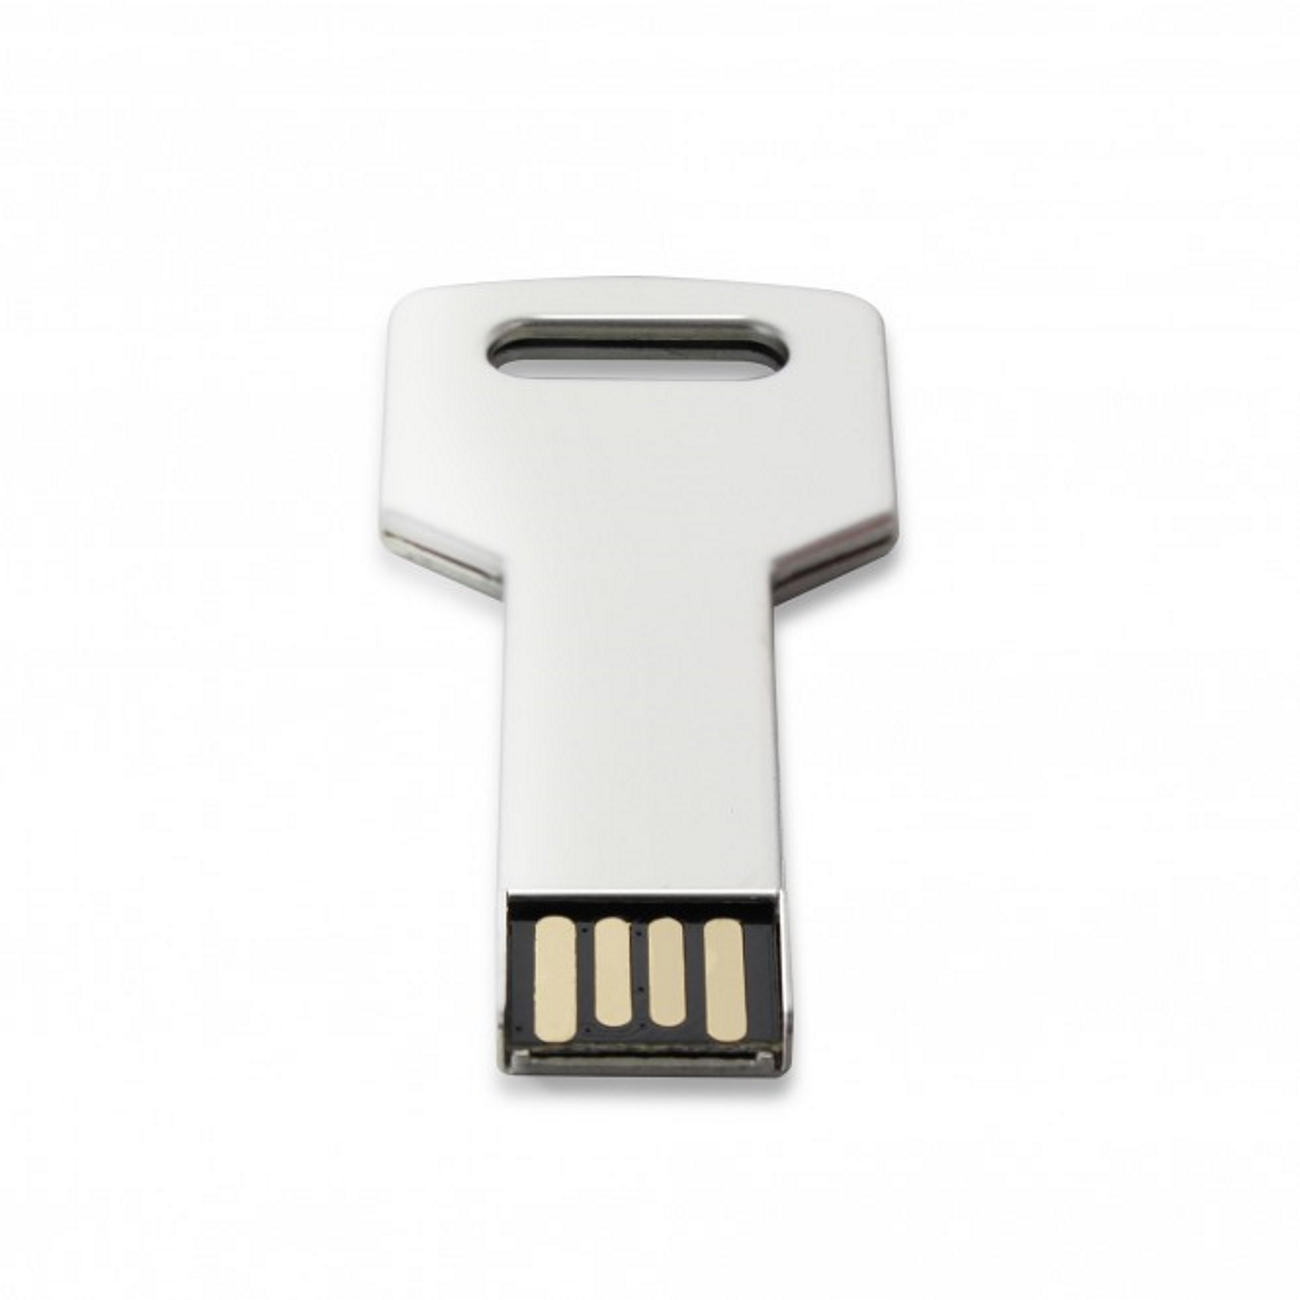 1 USB ®Schlüssel (Silber, GERMANY Key USB-Stick GB)